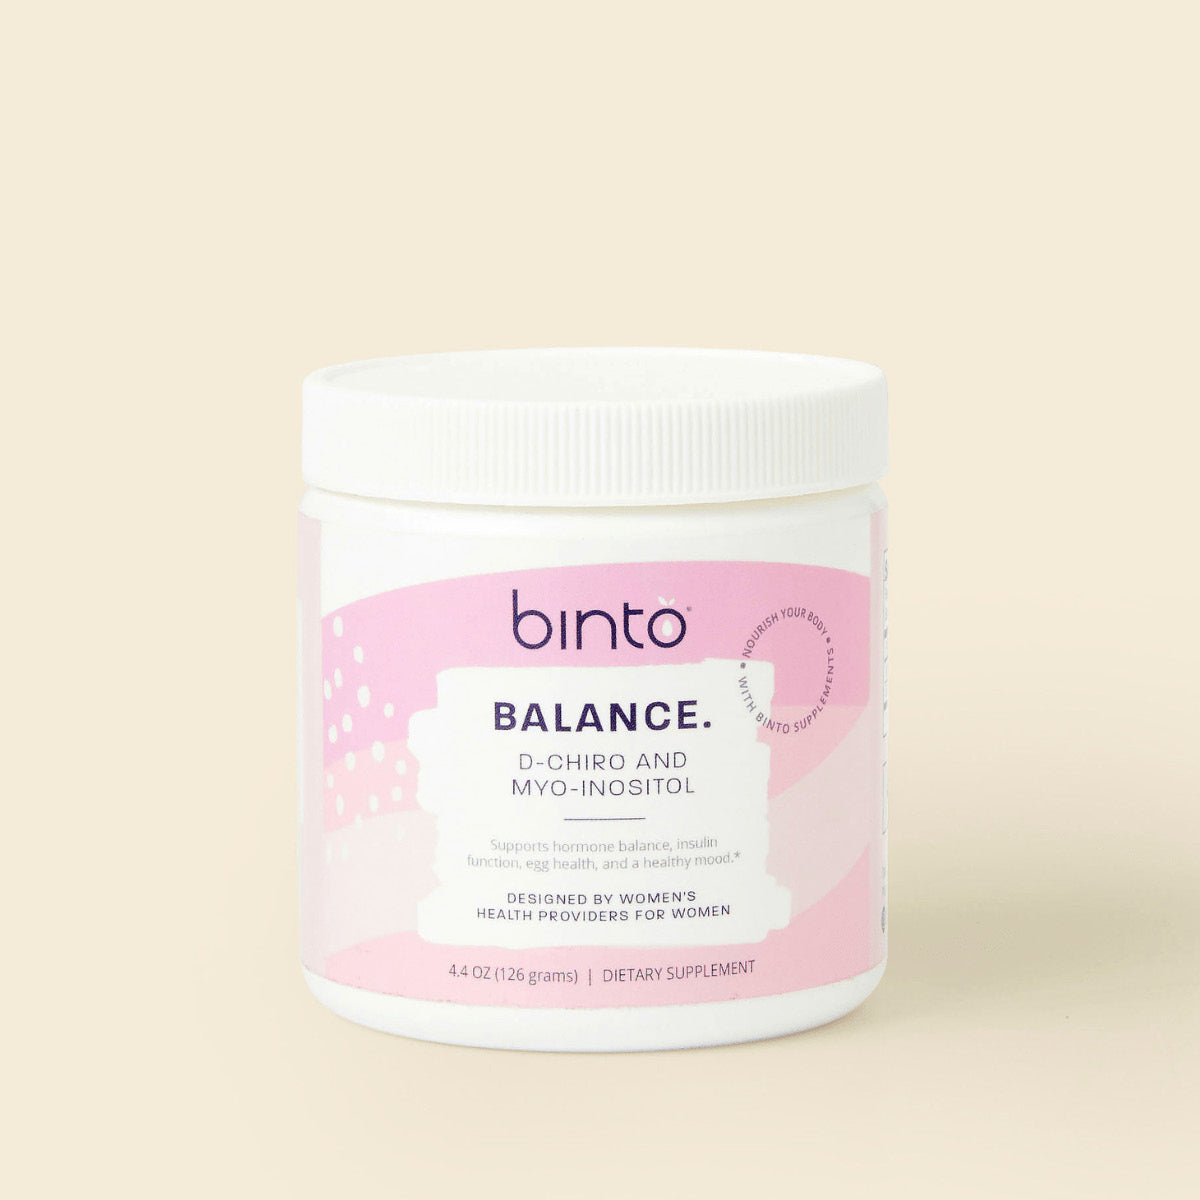 It's Giving Winter Survival Essentials - Binto